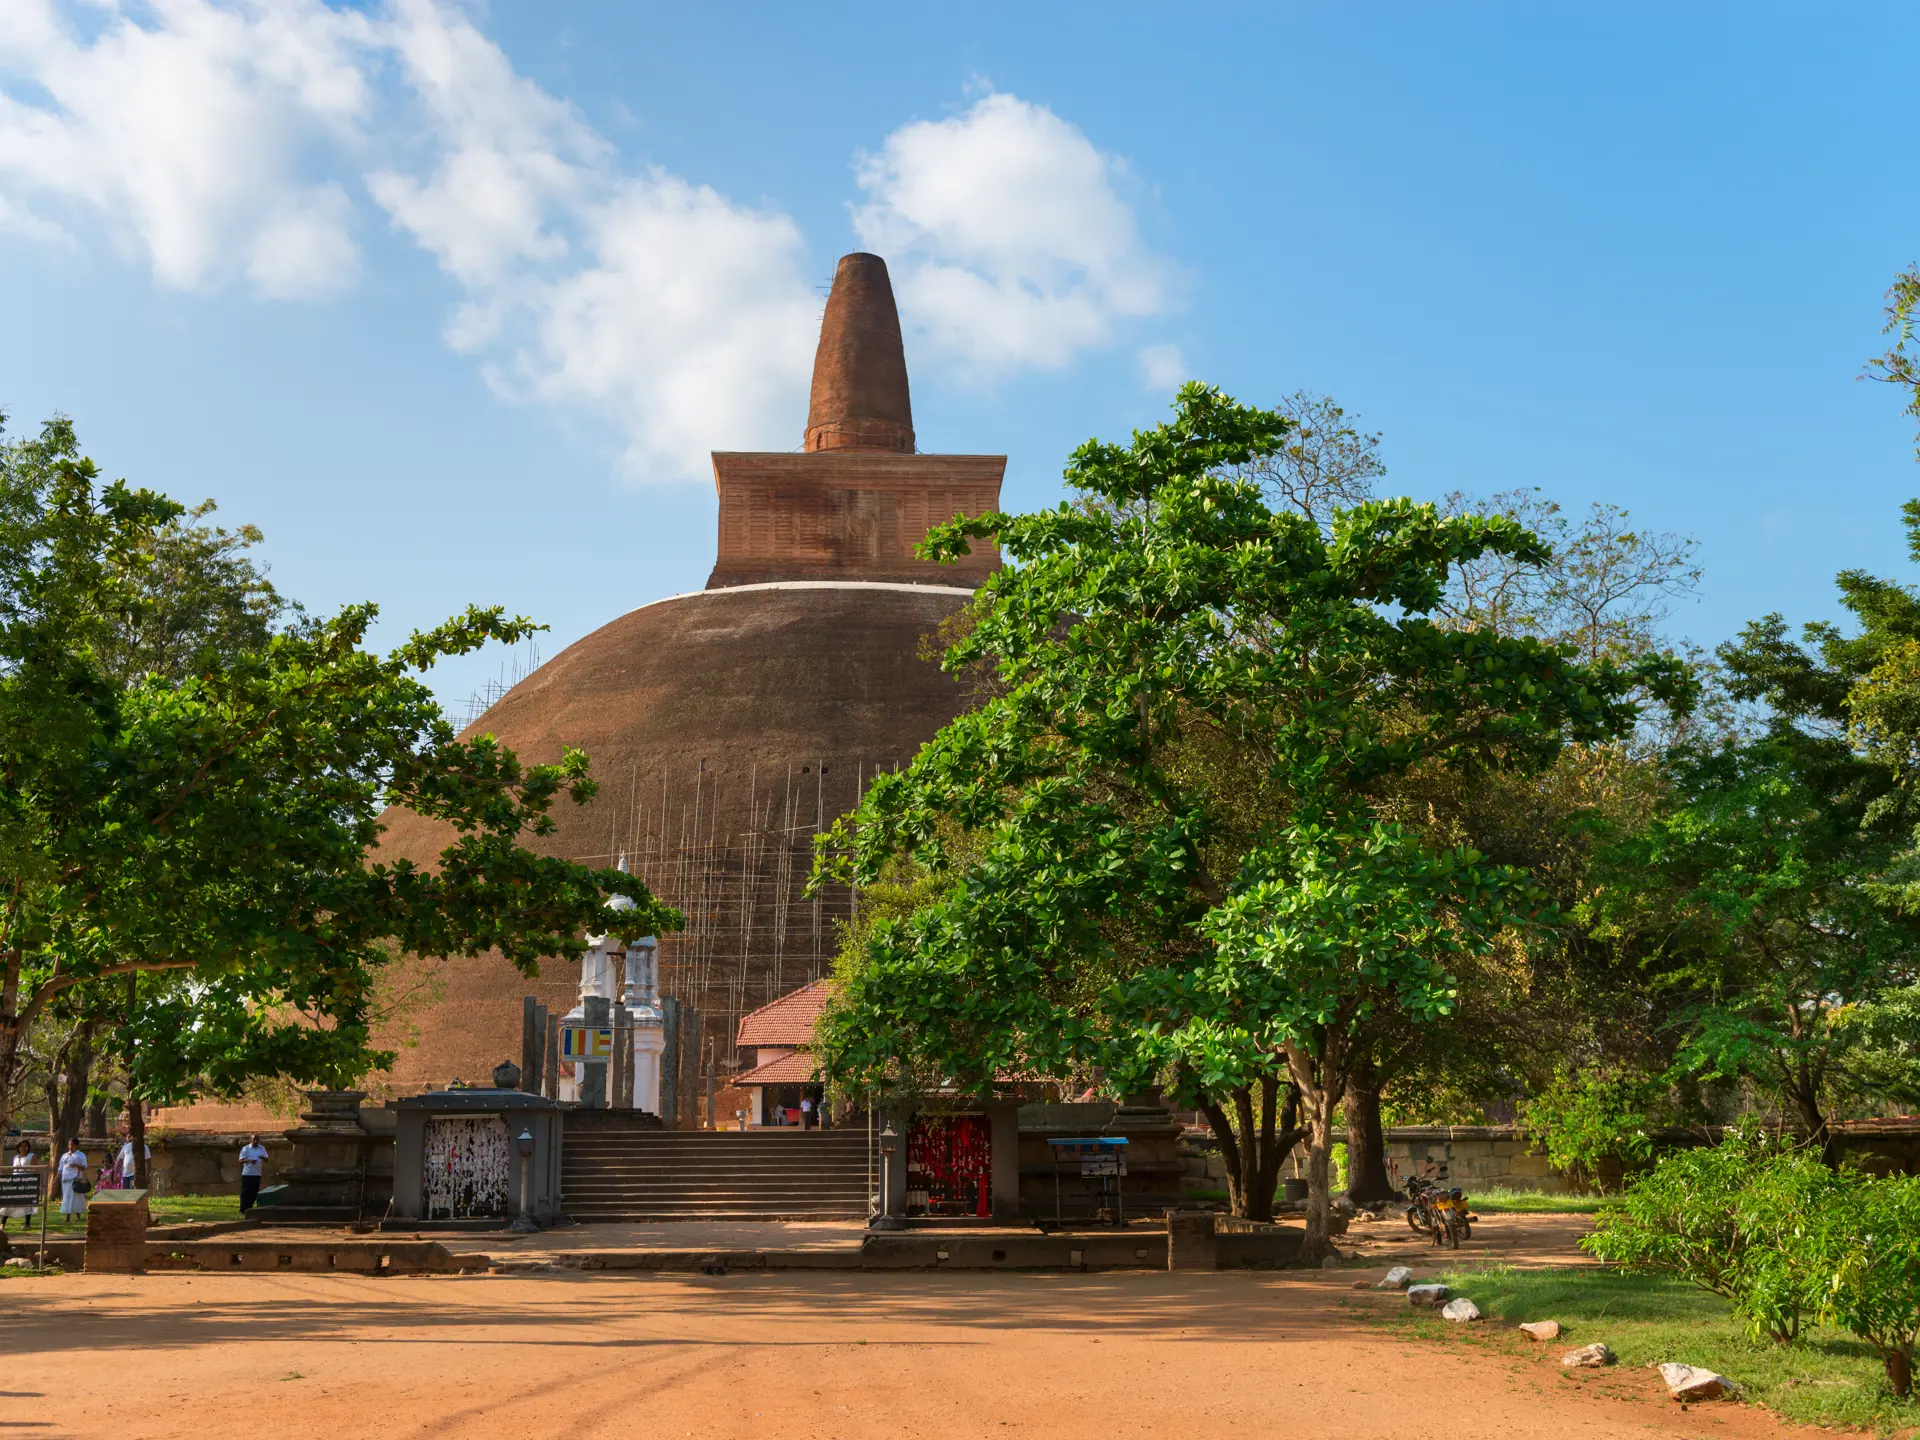 Adhayagiri dagoba (stupa) on Apr 16, 2013 in Anuradhapura_150914597.jpg